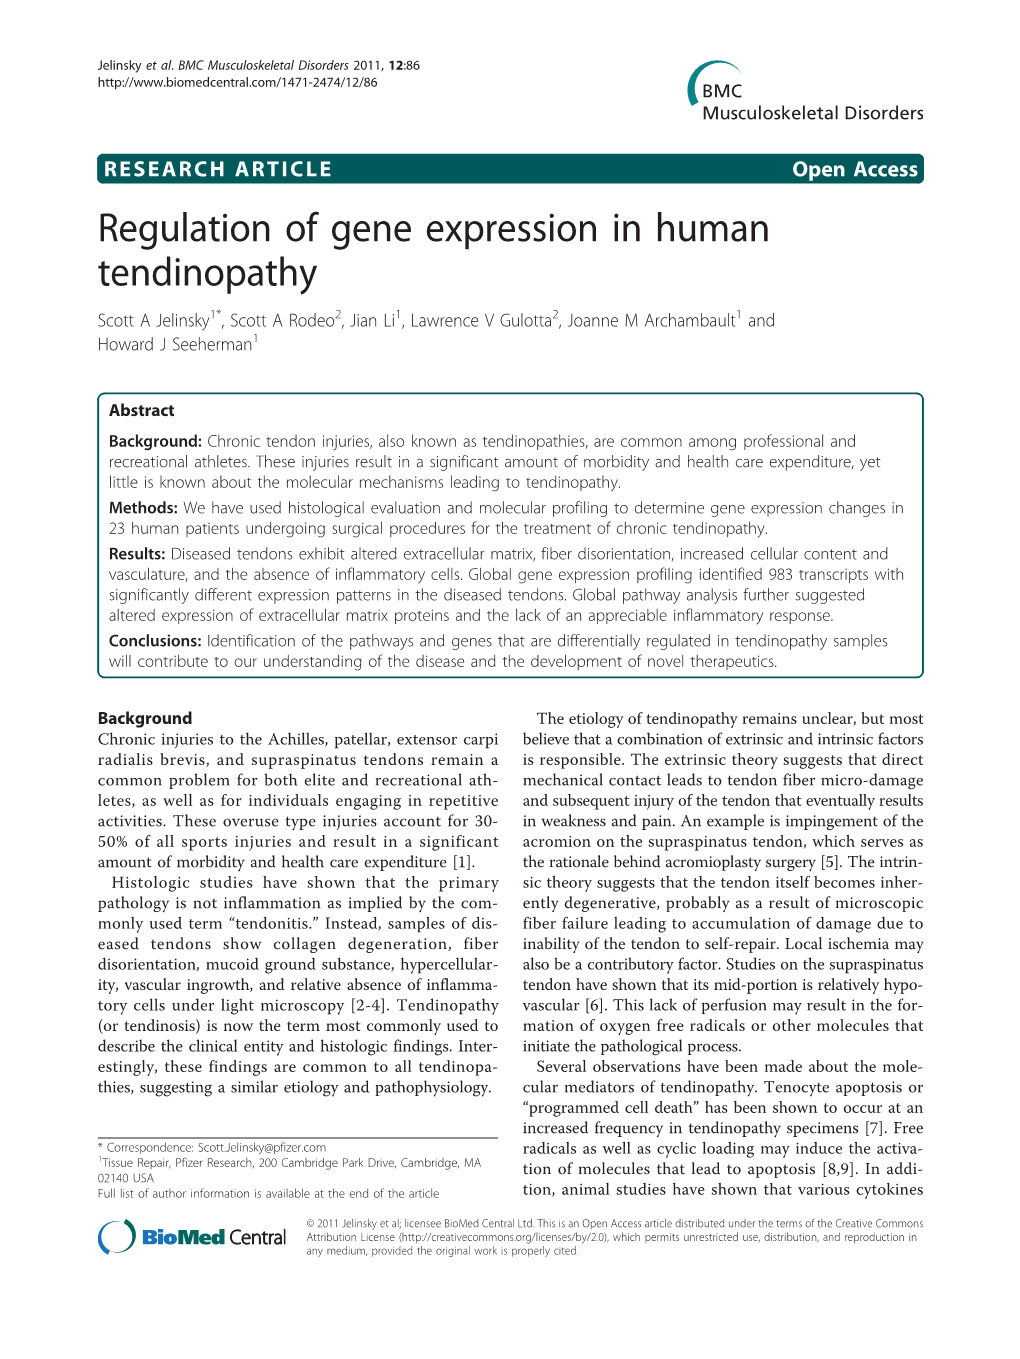 Regulation of Gene Expression in Human Tendinopathy Scott a Jelinsky1*, Scott a Rodeo2, Jian Li1, Lawrence V Gulotta2, Joanne M Archambault1 and Howard J Seeherman1